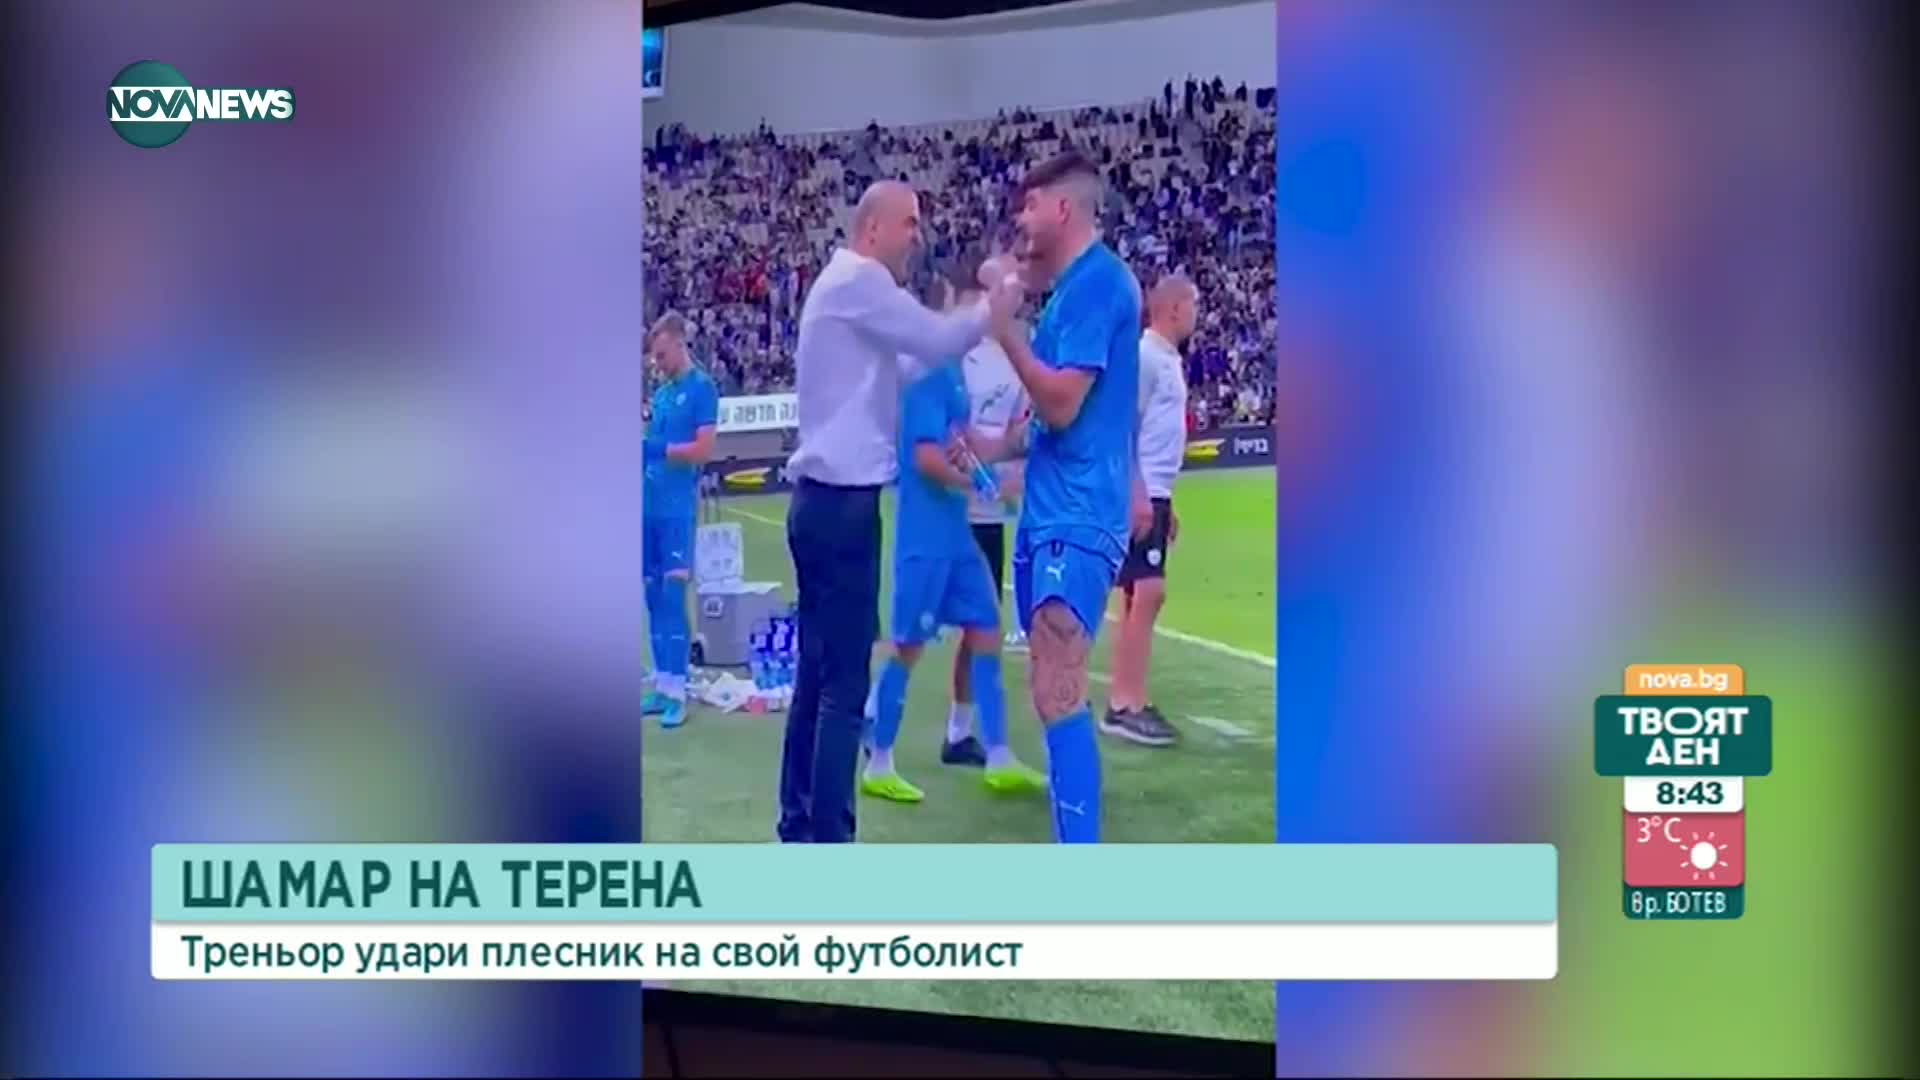 Треньор удари шамар на свой футболист на терена